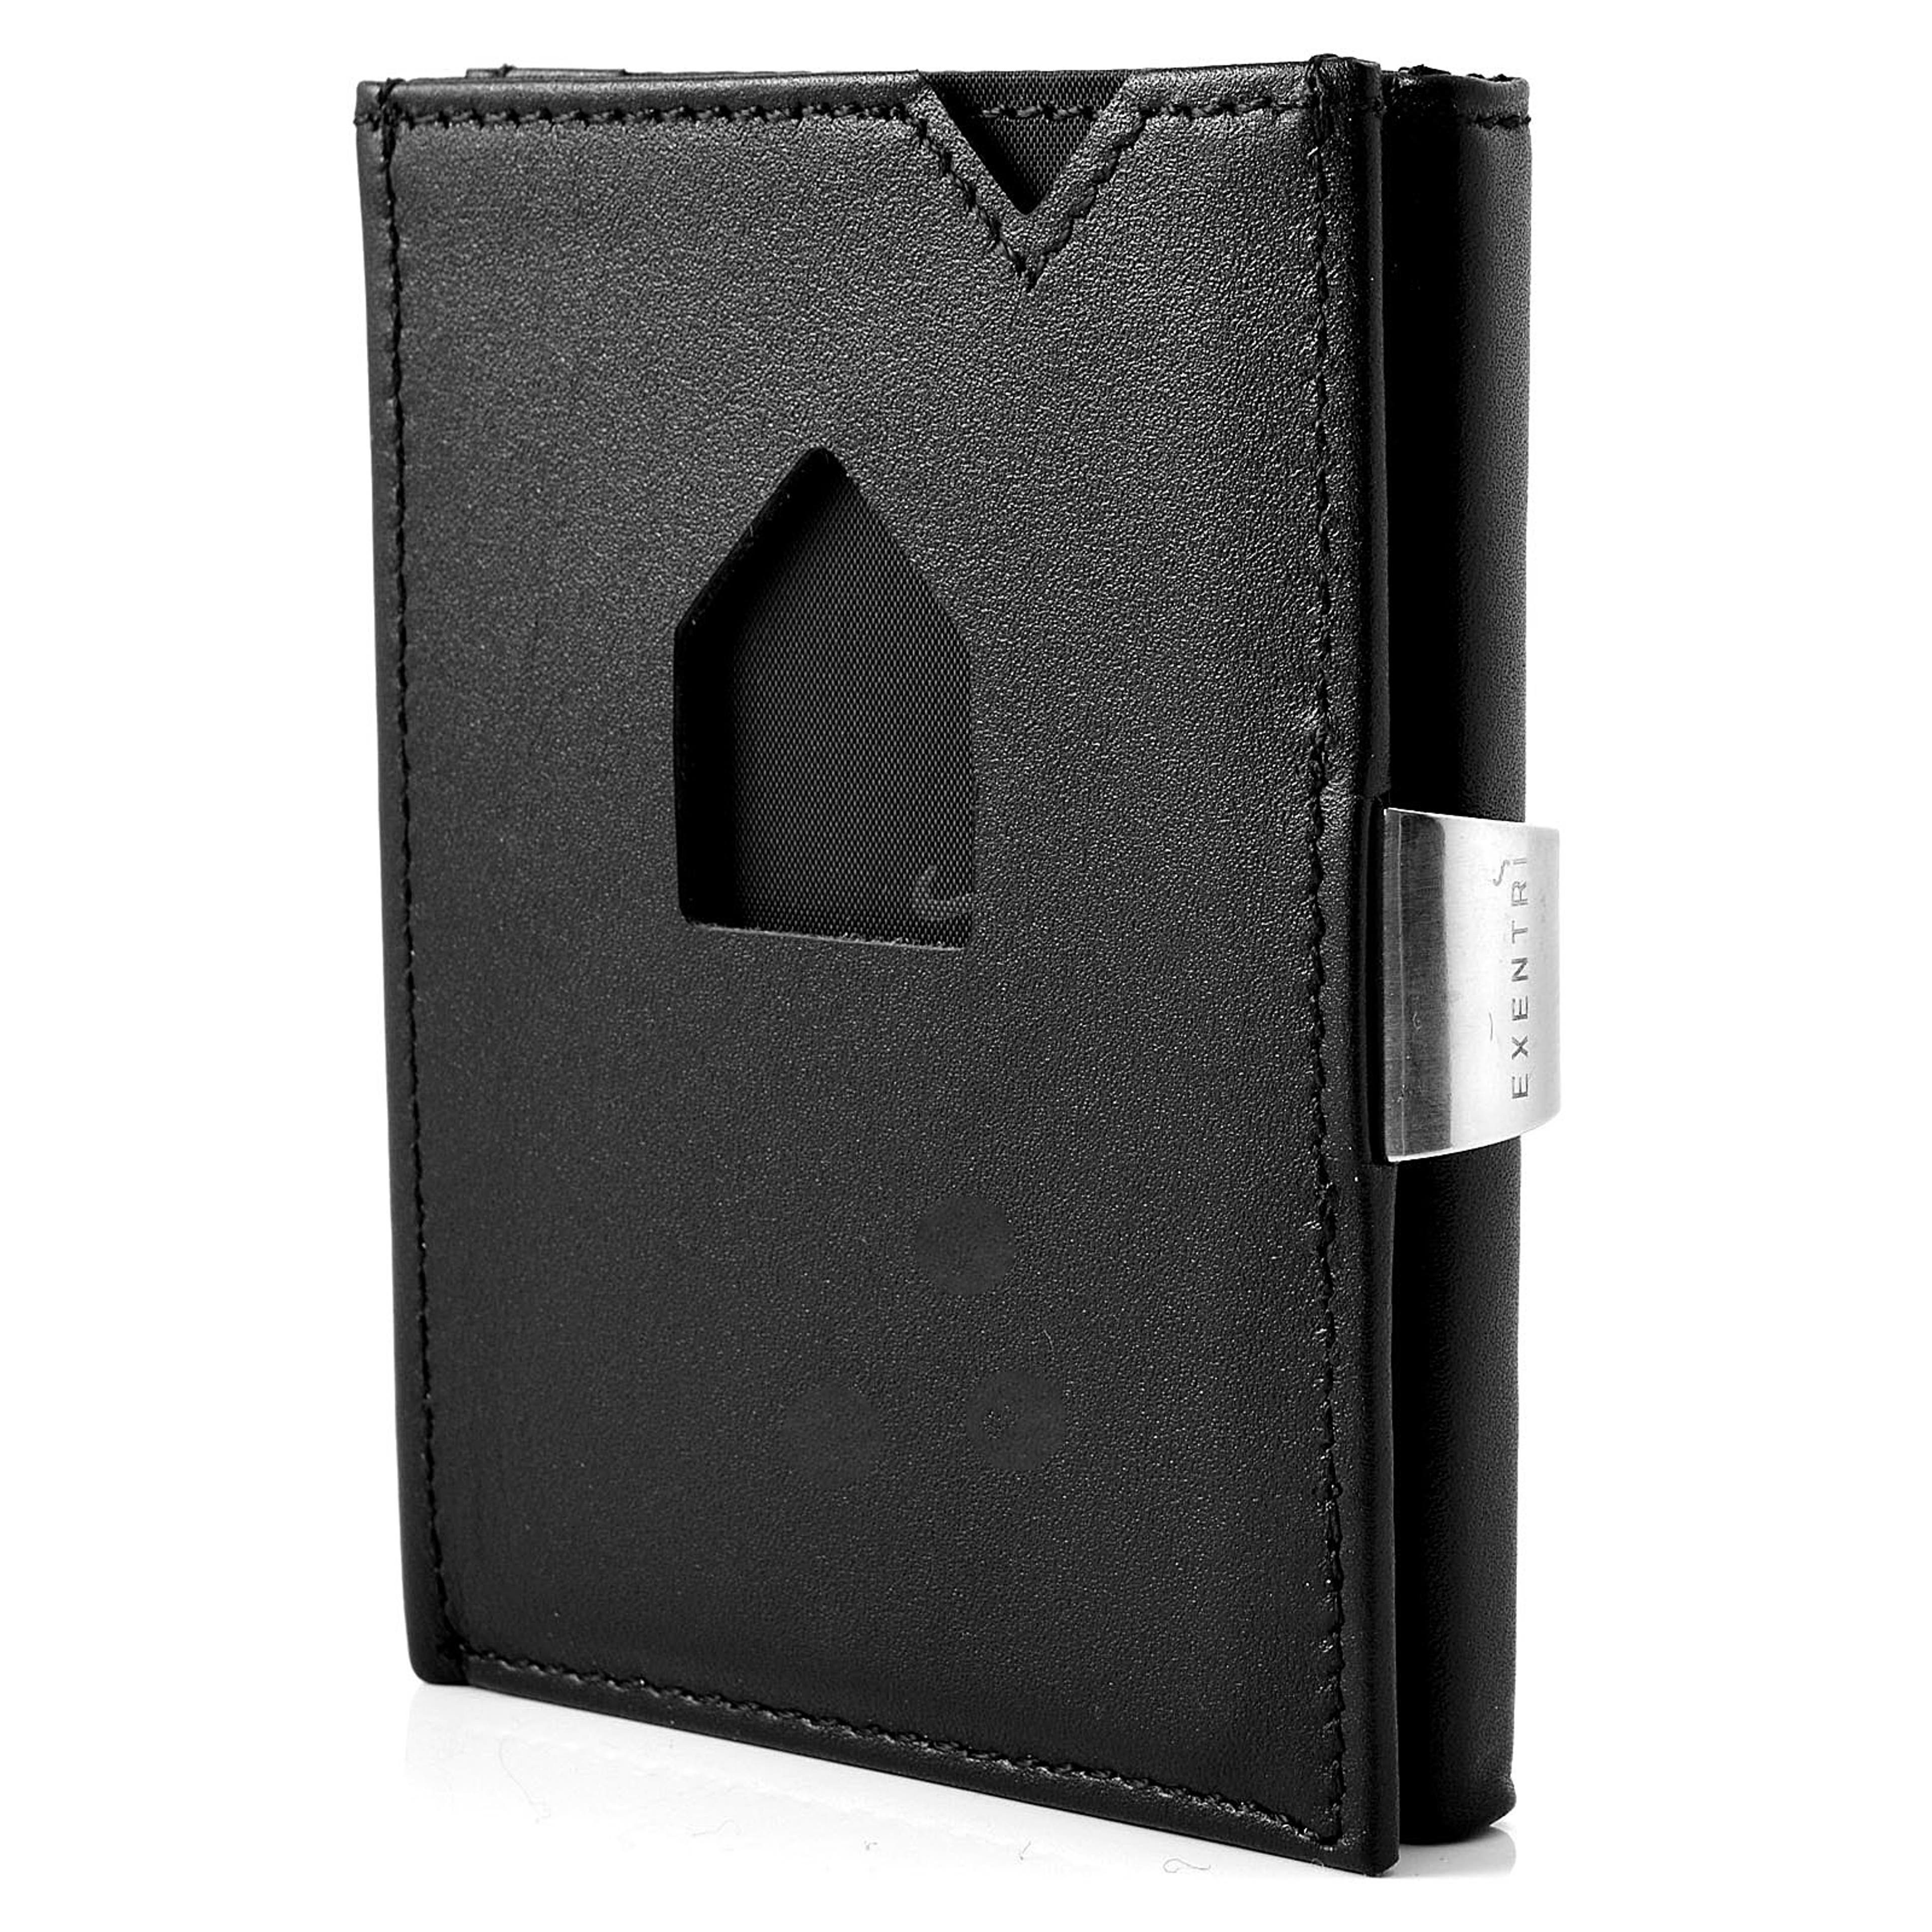 Black Leather Card Holder With RFID Blocker